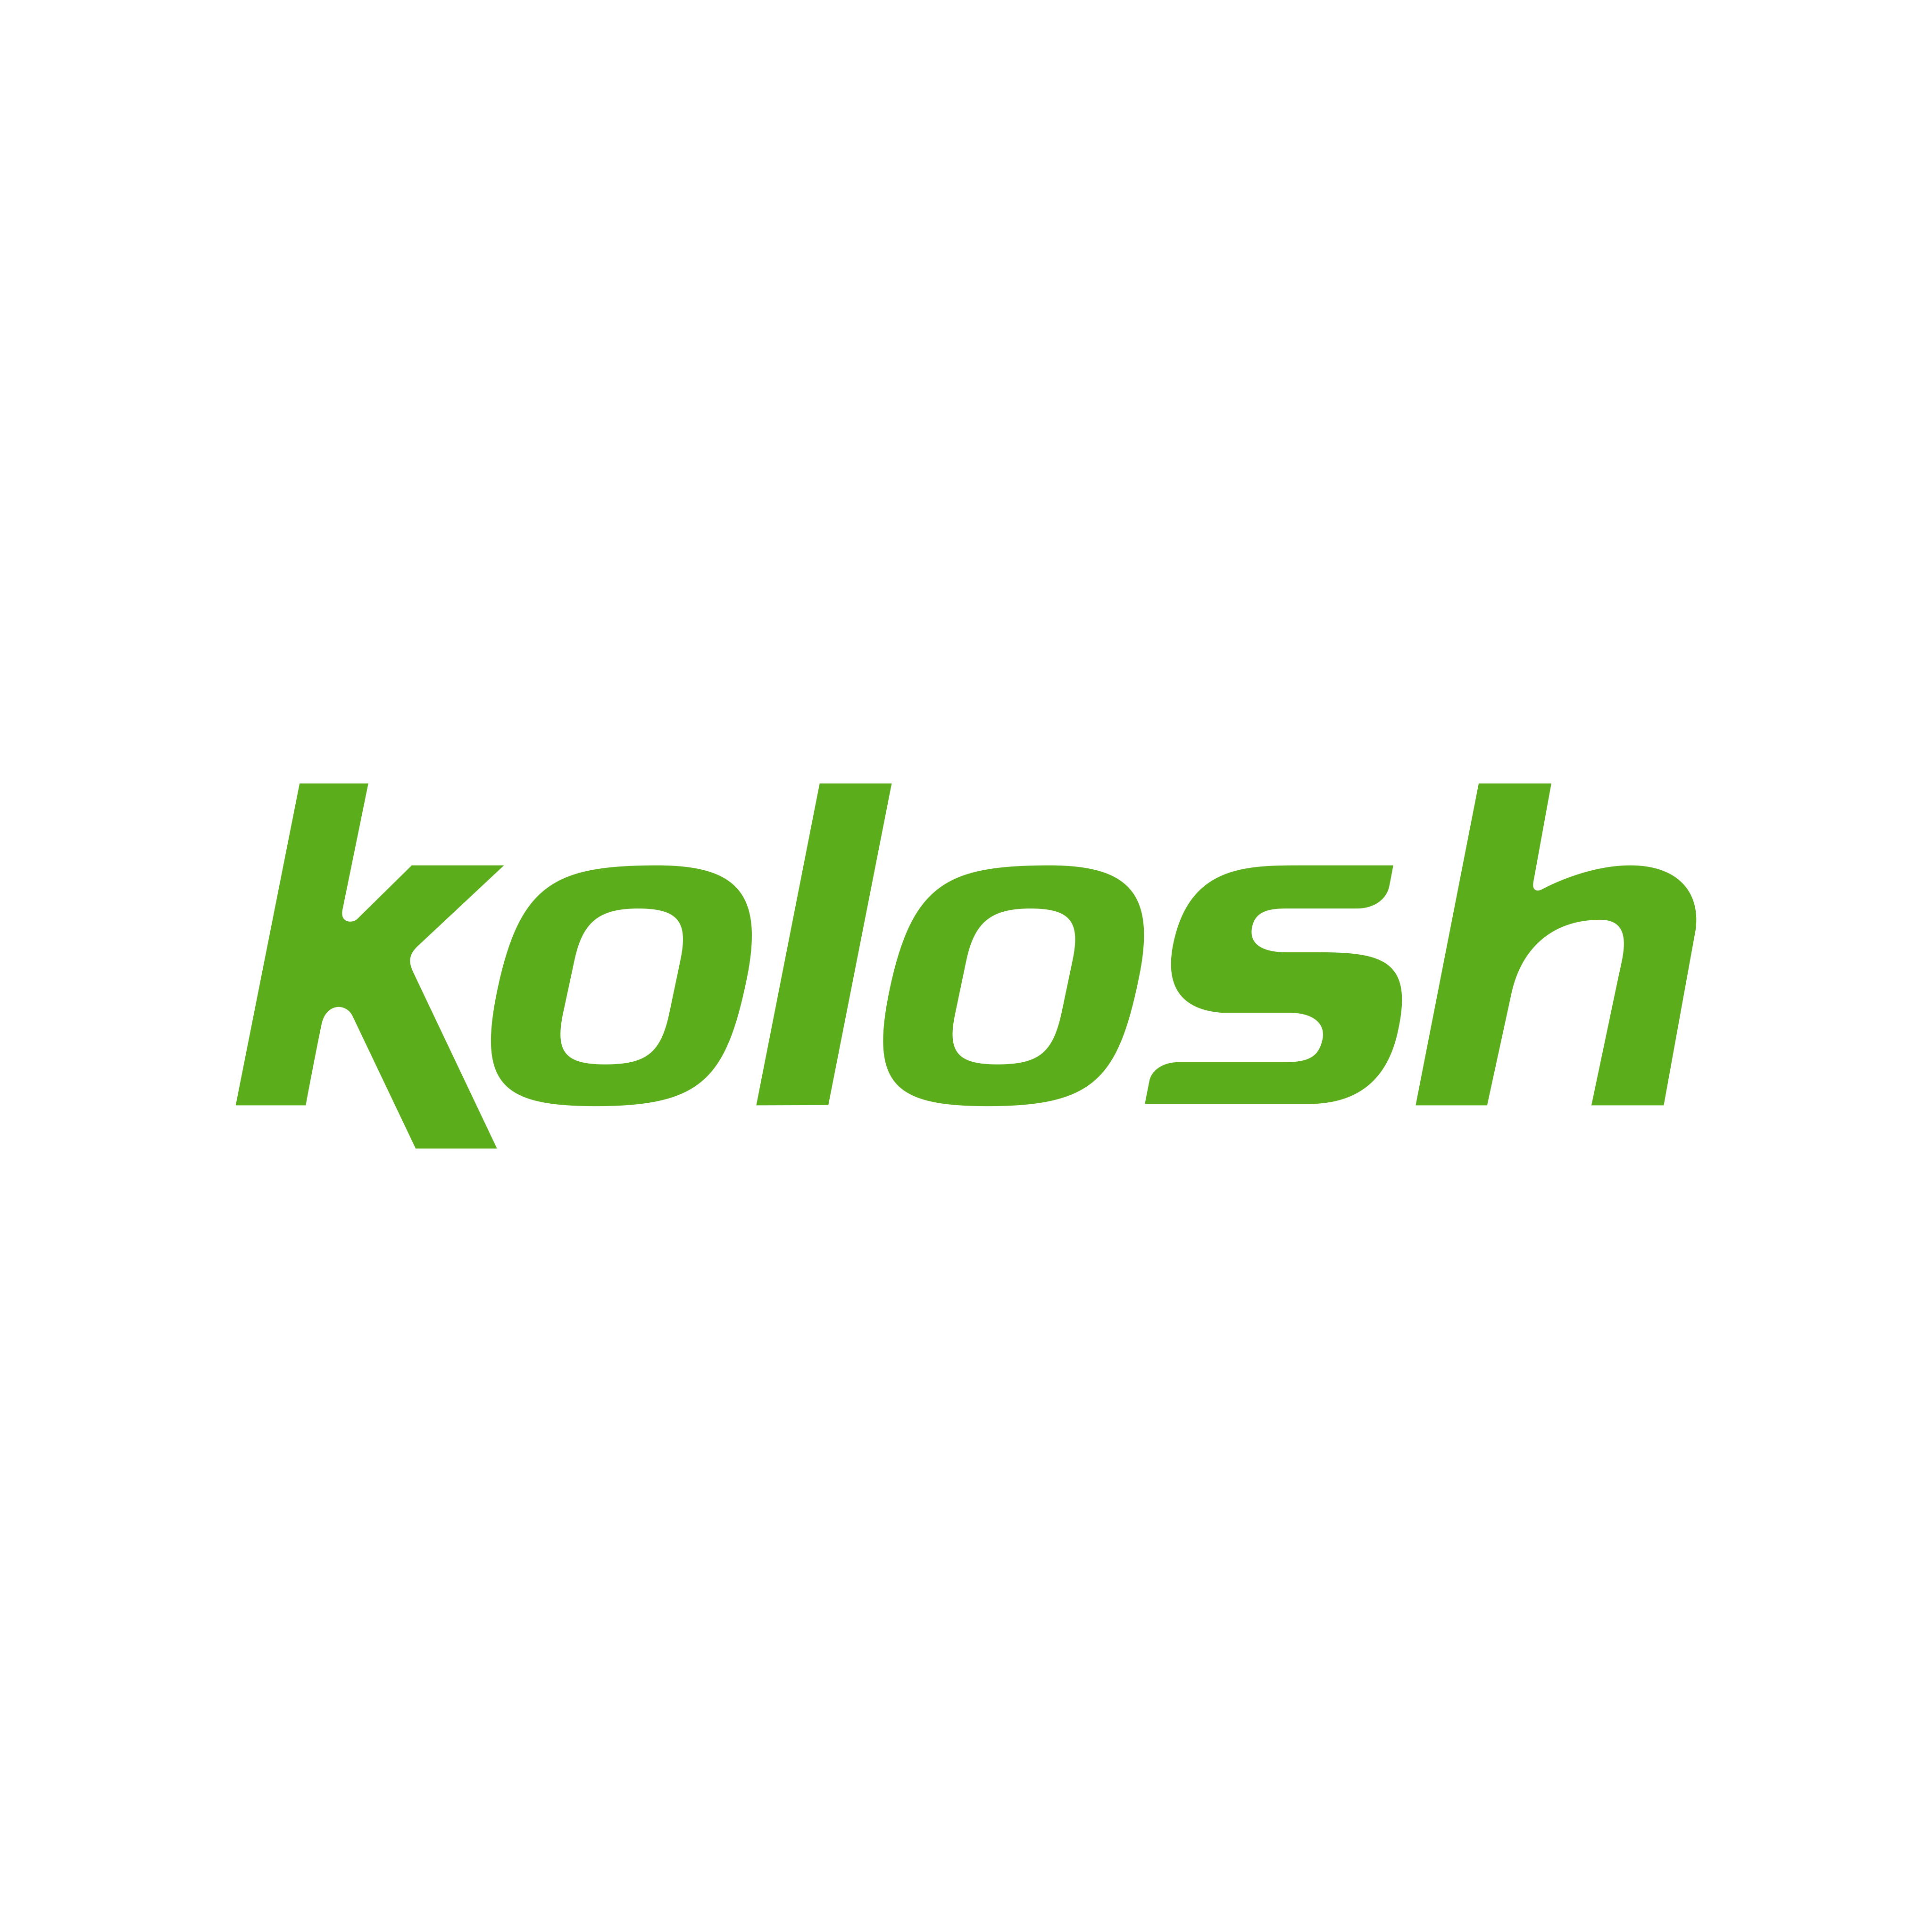 Kolosh Logo PNG.